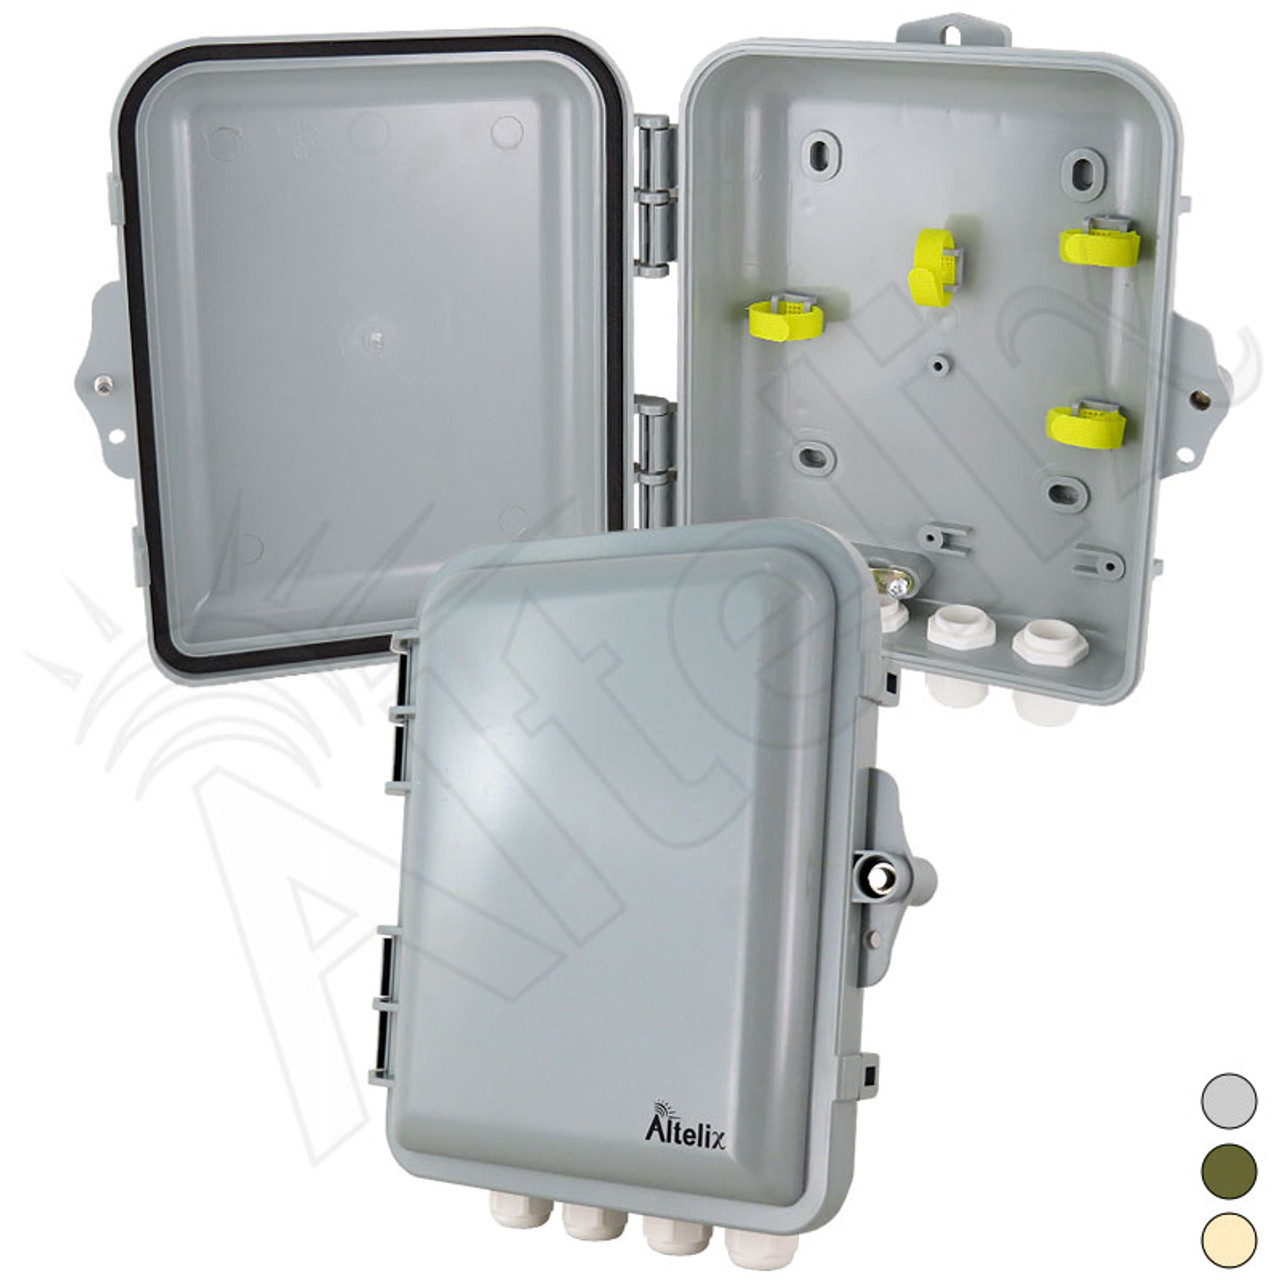 Altelix 9x8x3 PC+ABS Vented Weatherproof NEMA Utility Box with Hinged Door